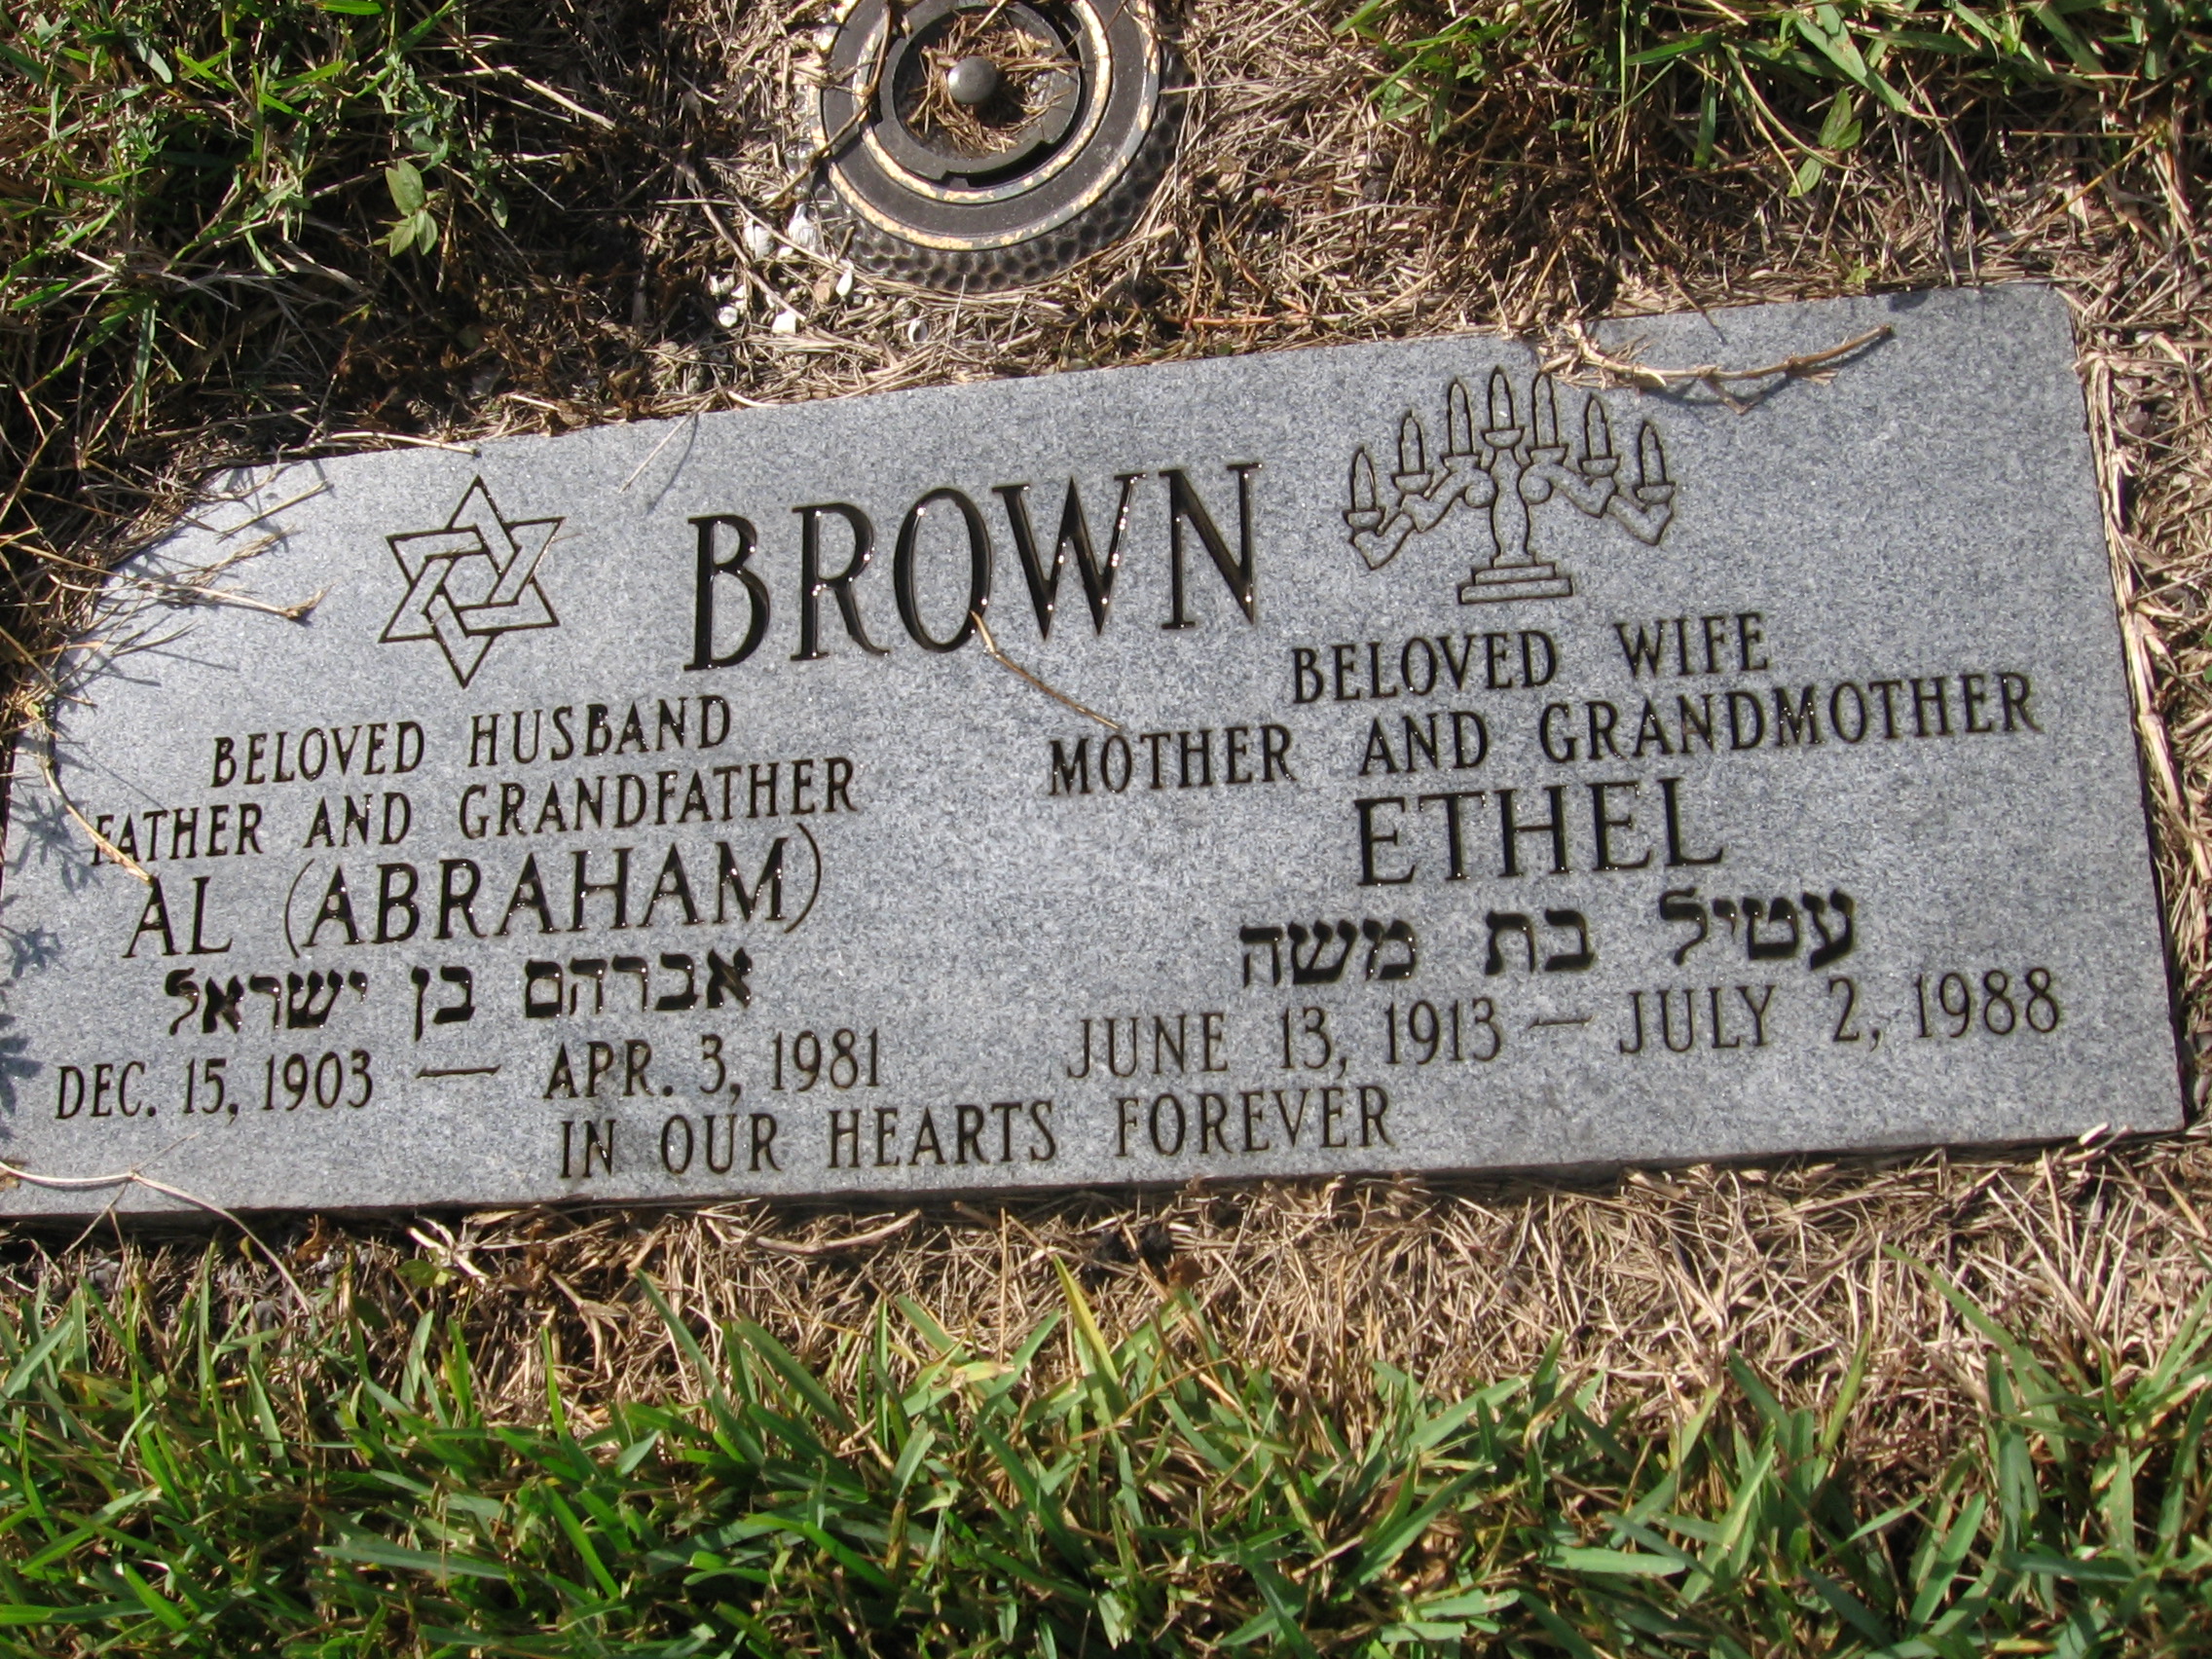 Abraham "Al" Brown